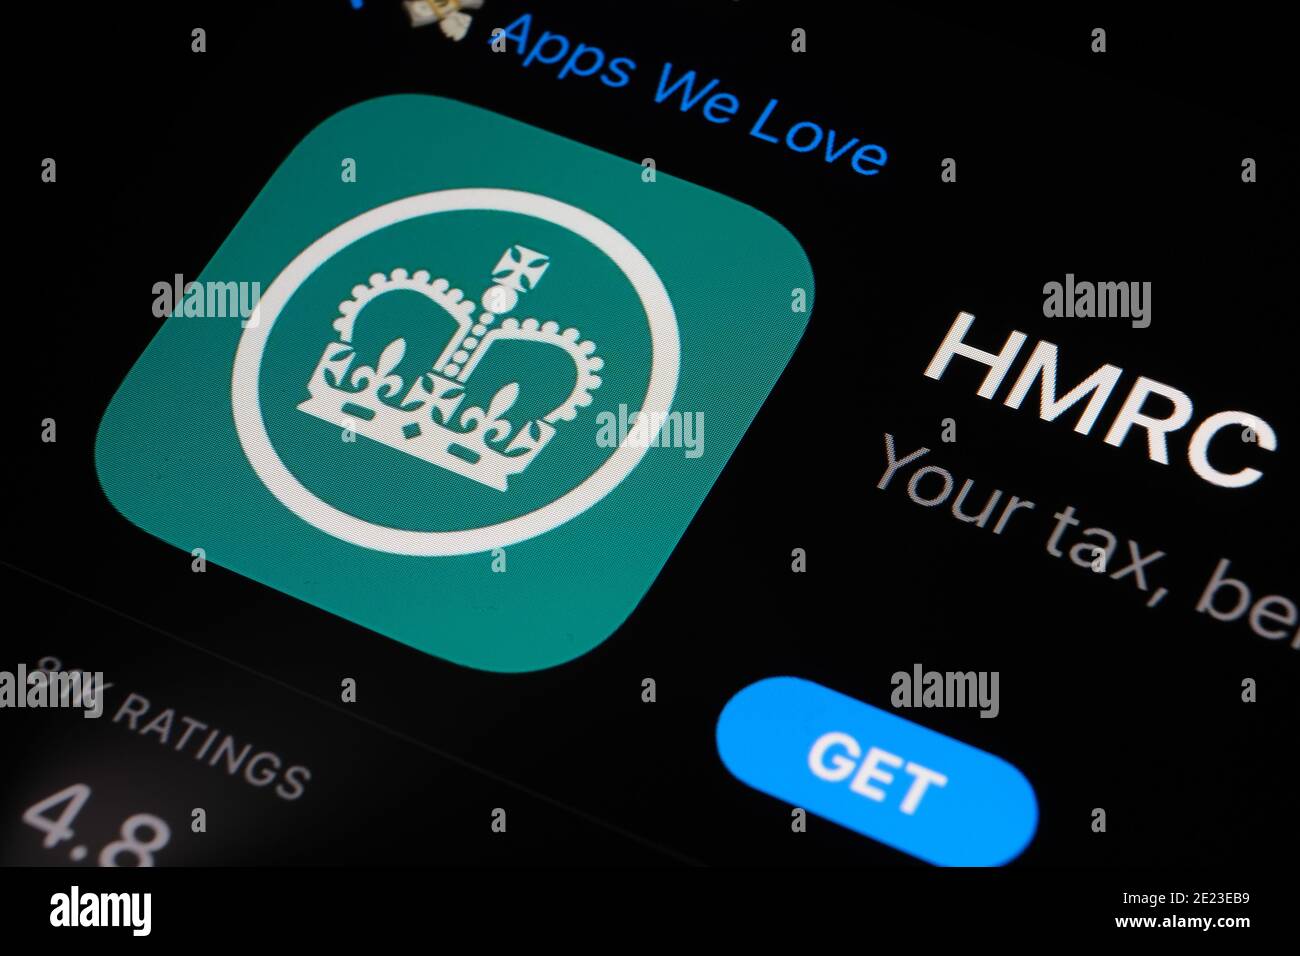 Stone, Staffordshire / United Kingdom - January 11 2021: HMRC app logo on a glowing ipad screen. Stock Photo